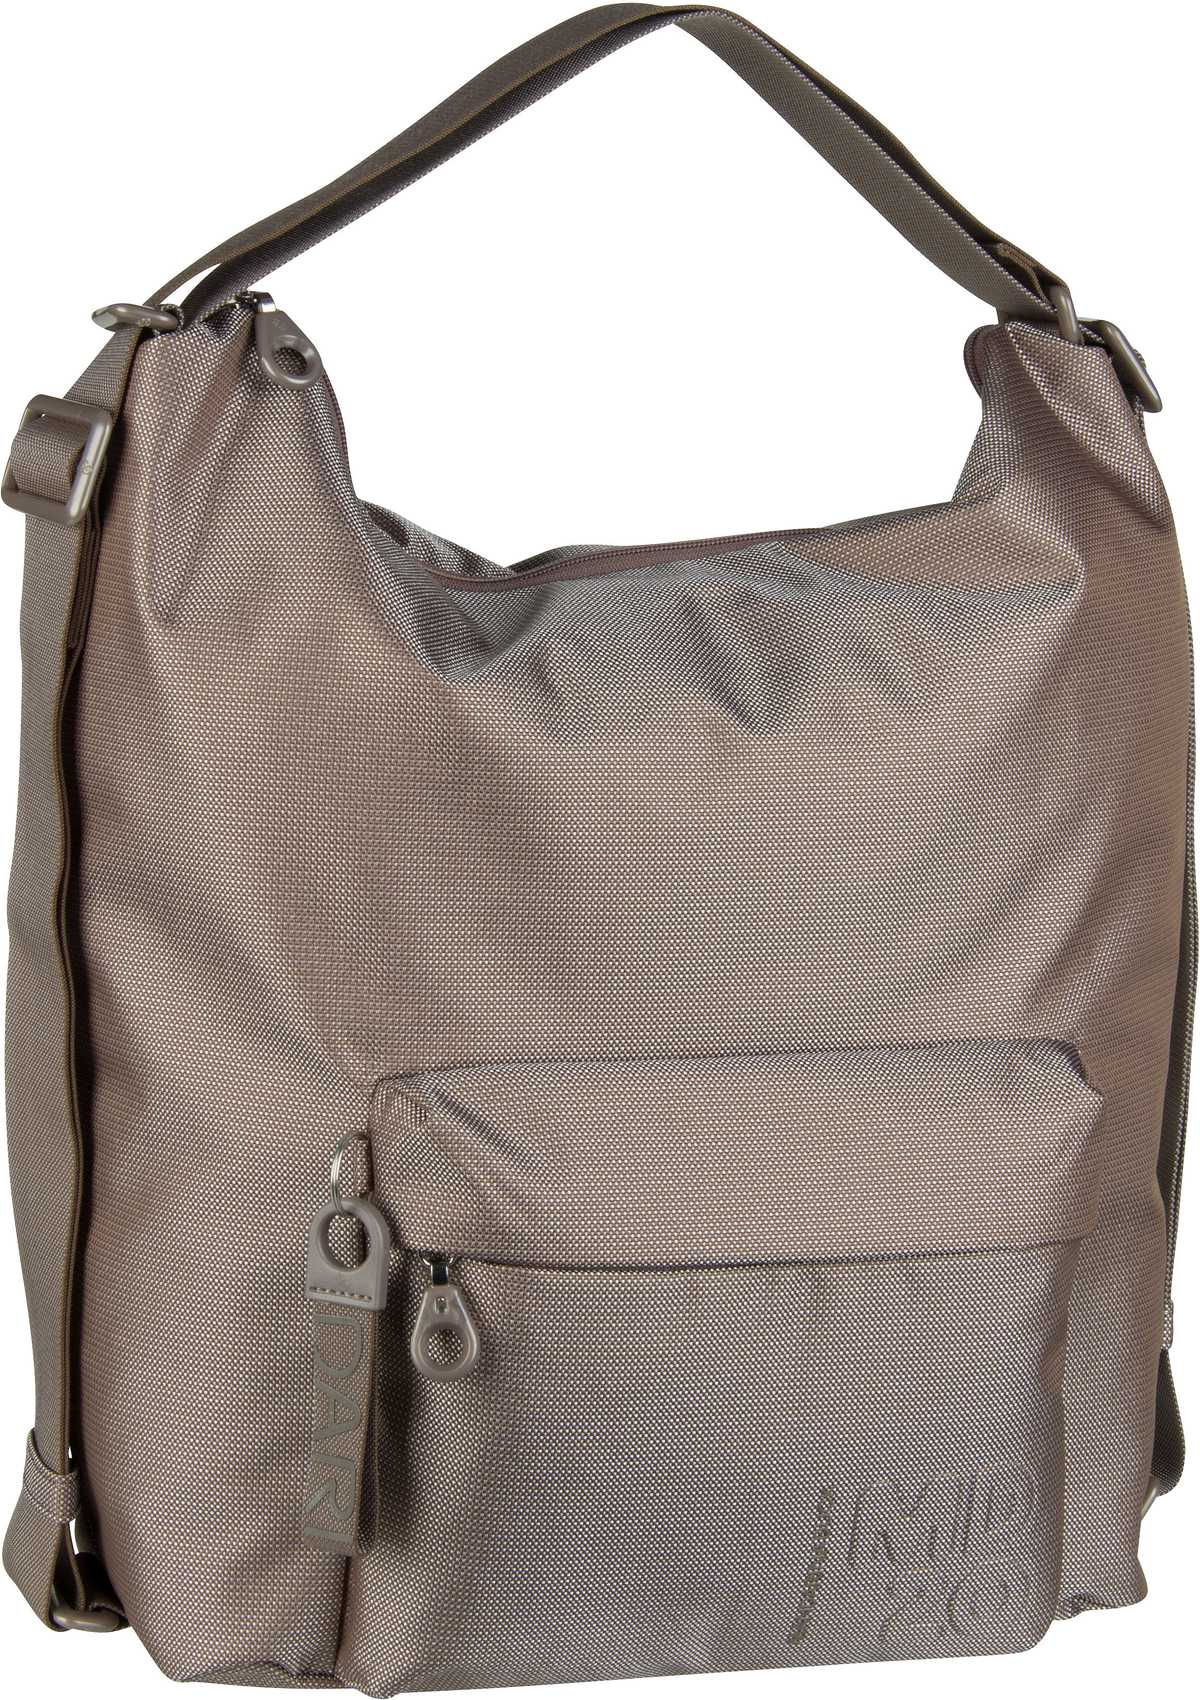 Mandarina Duck MD20 Hobo Backpack QMT09  in Braun (16.3 Liter), Rucksack / Backpack